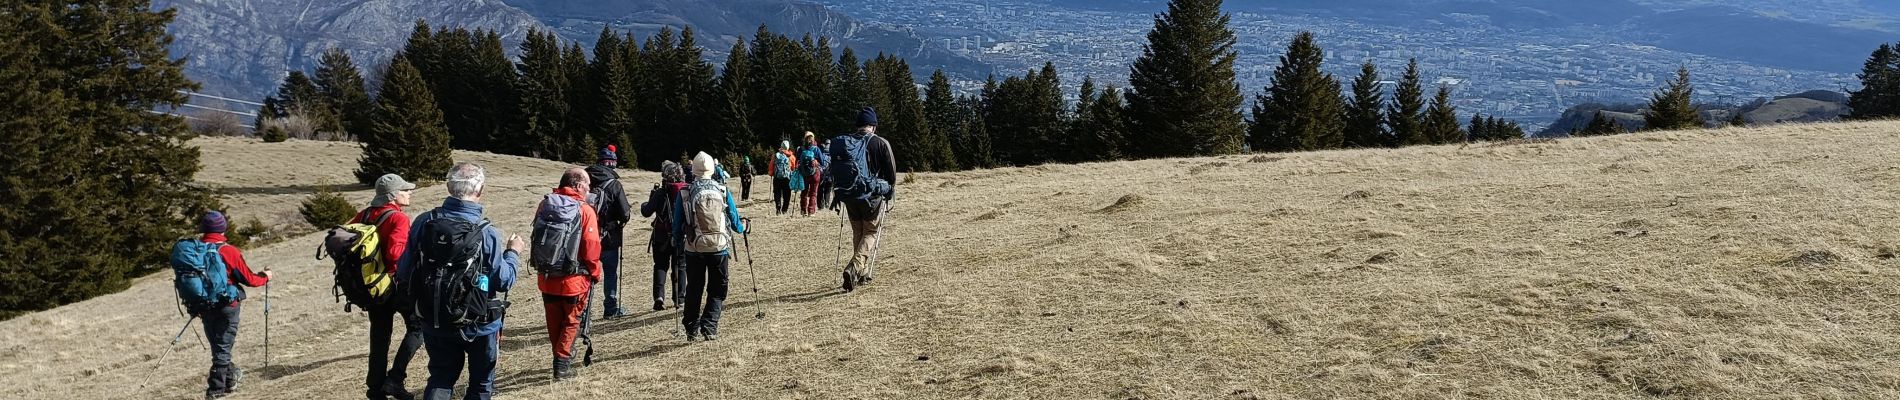 Trail Walking Engins - engins fournel tour du sornin - Photo